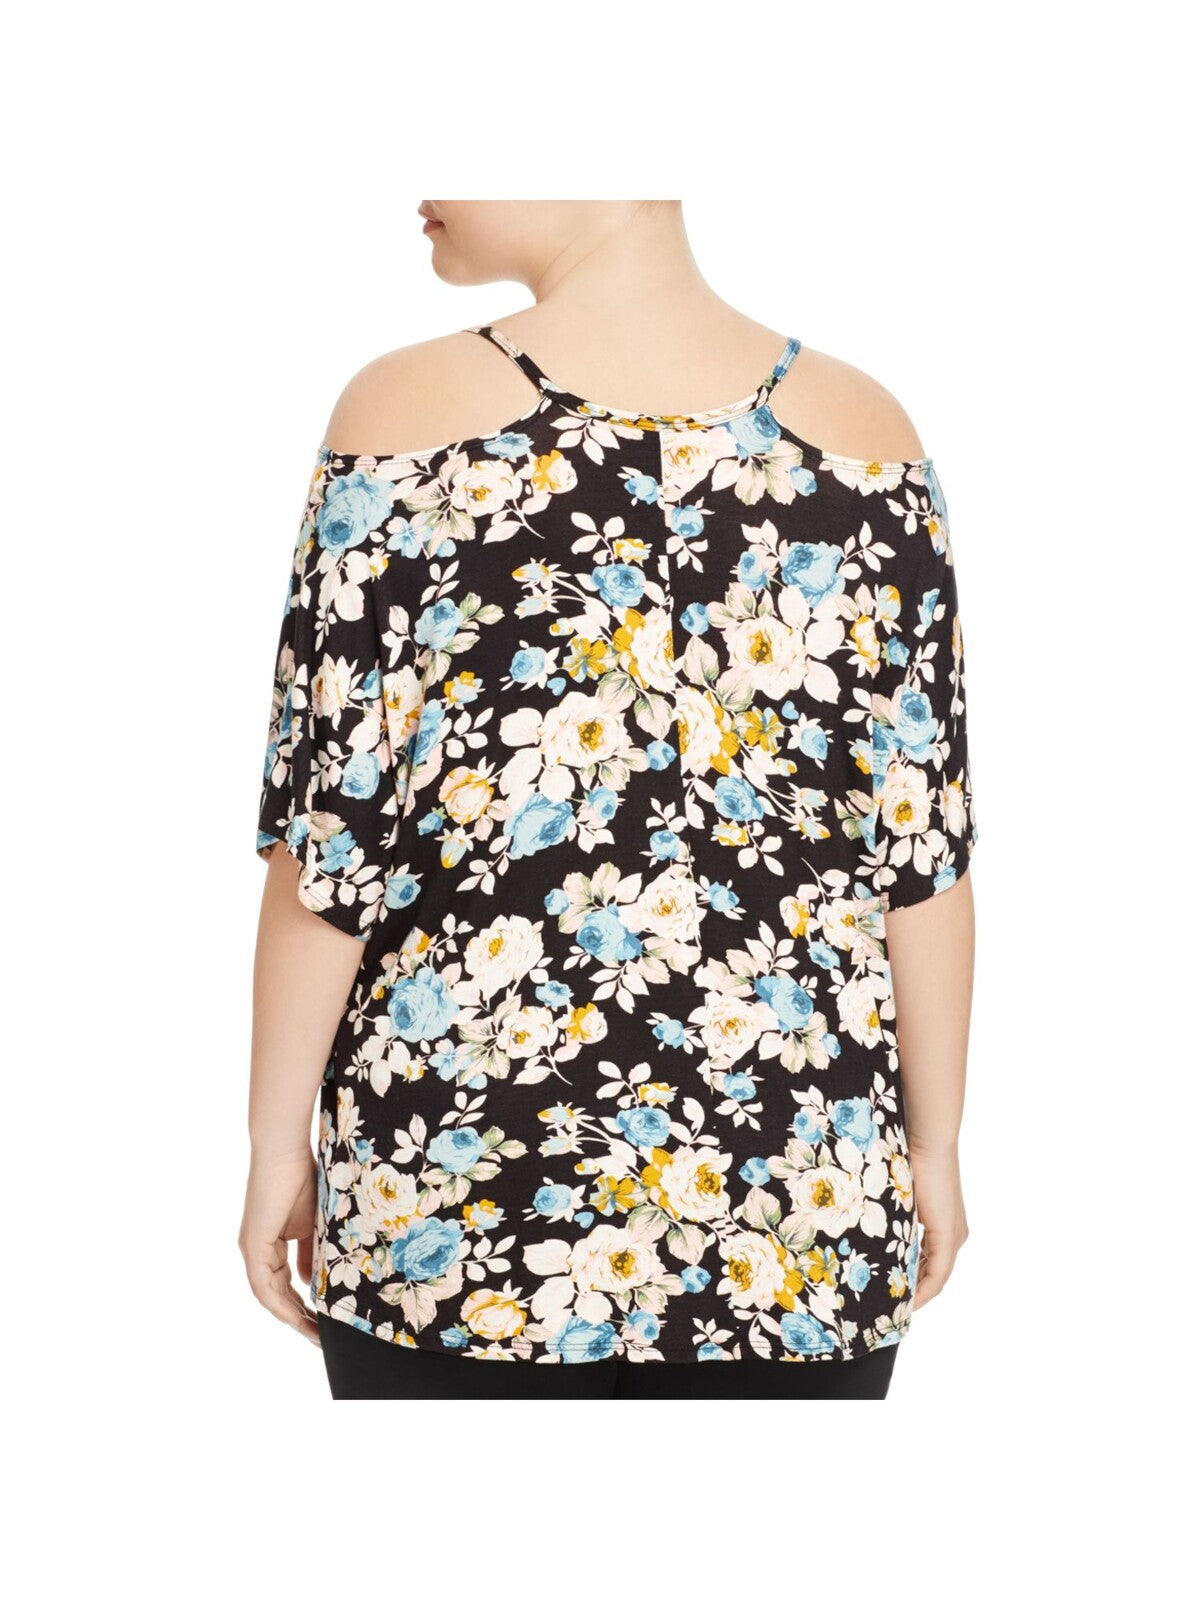 ALISON ANDREWS Womens Black Cold Shoulder Floral Short Sleeve Scoop Neck T-Shirt Plus 2X